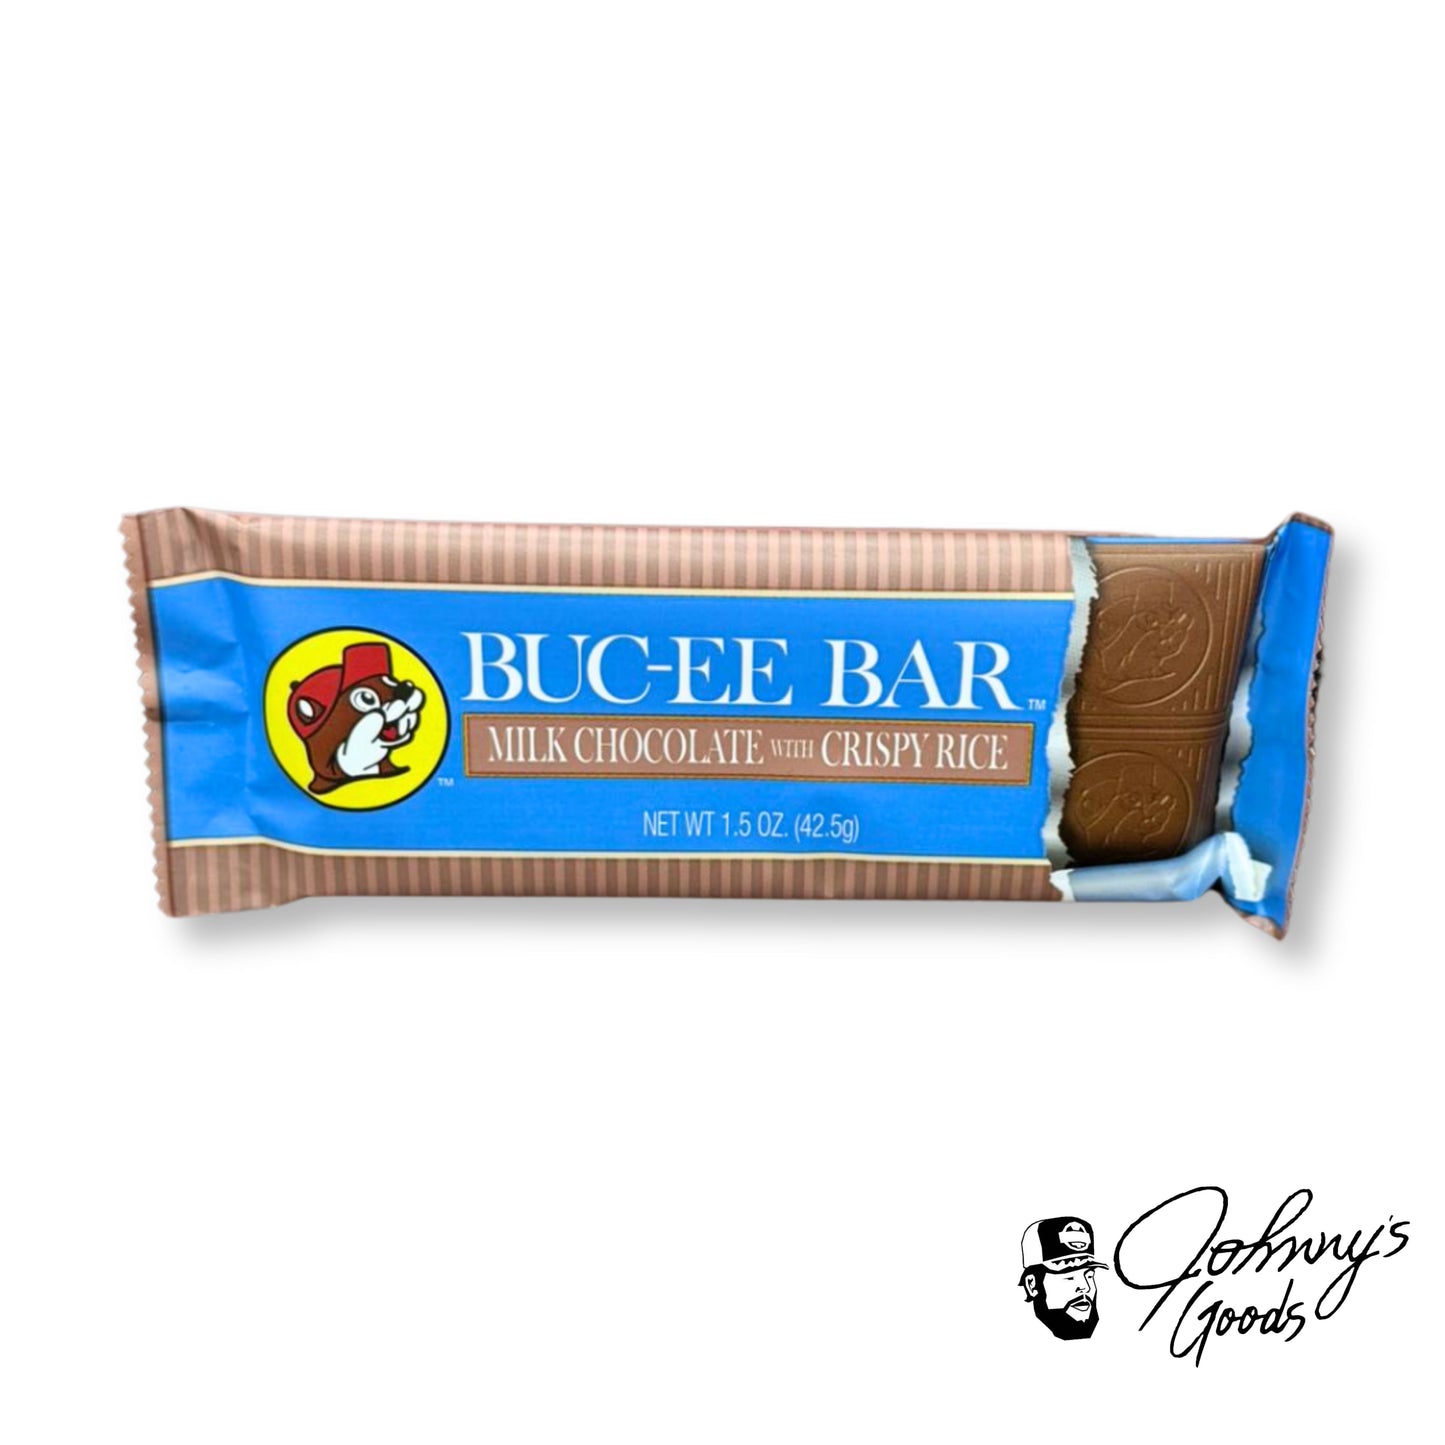 Buc ee's Chocolate Bars texas candy bars buc ees buc ee's bucees buccees buc-ees milk chocolate candy dark chocolates